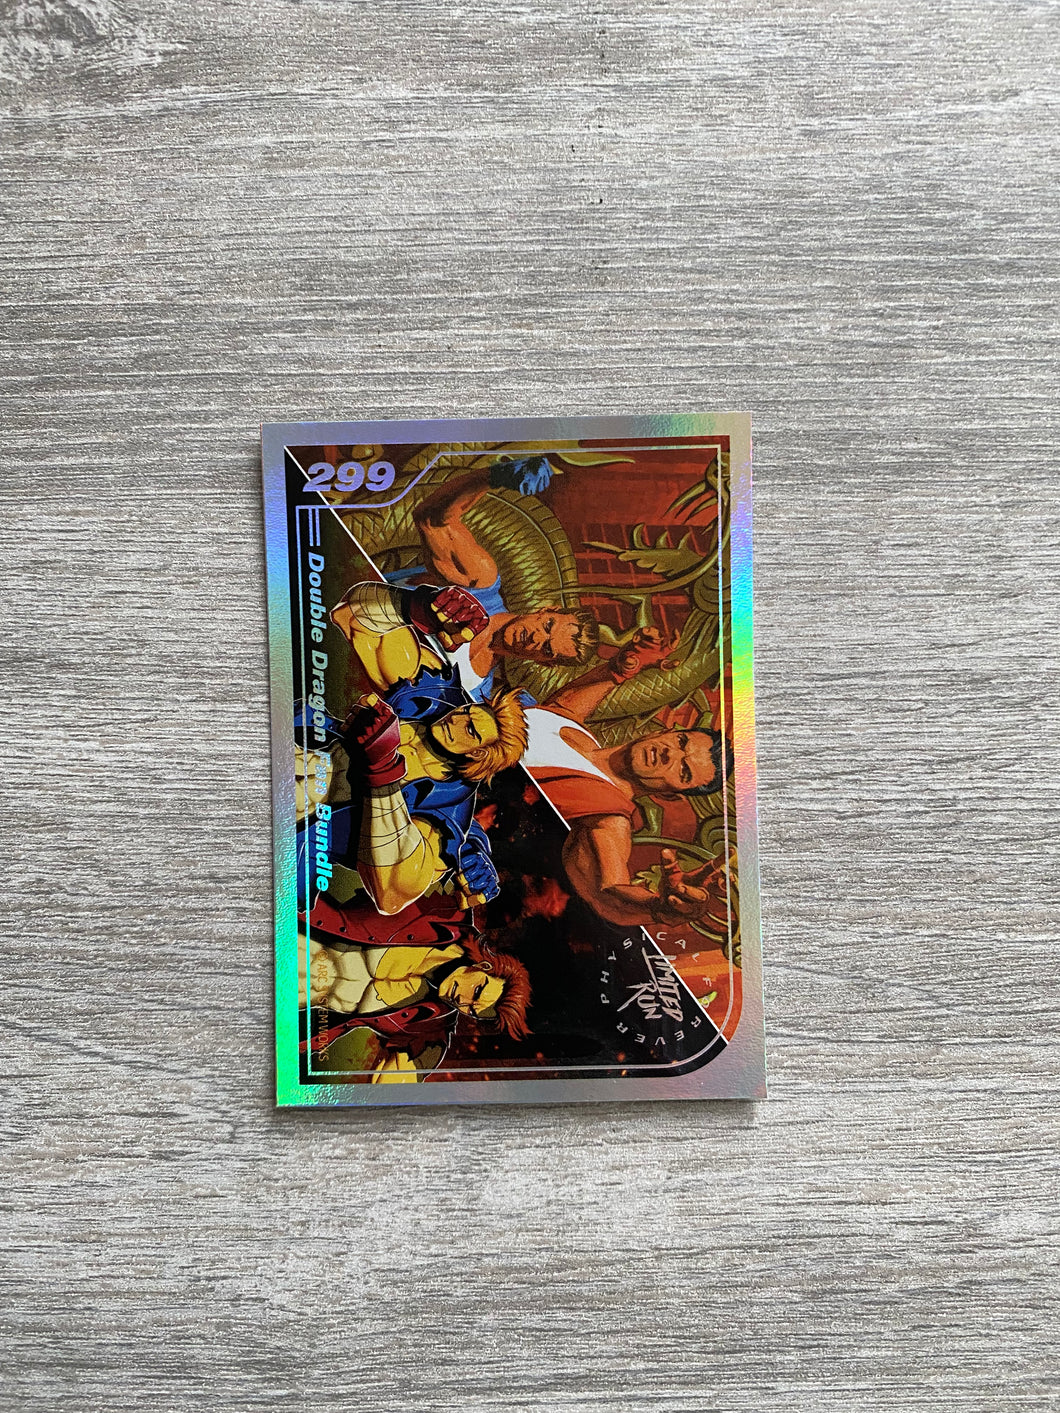 Gen2 #299 Silver Double dragon Fan bundle Limited run games trading card